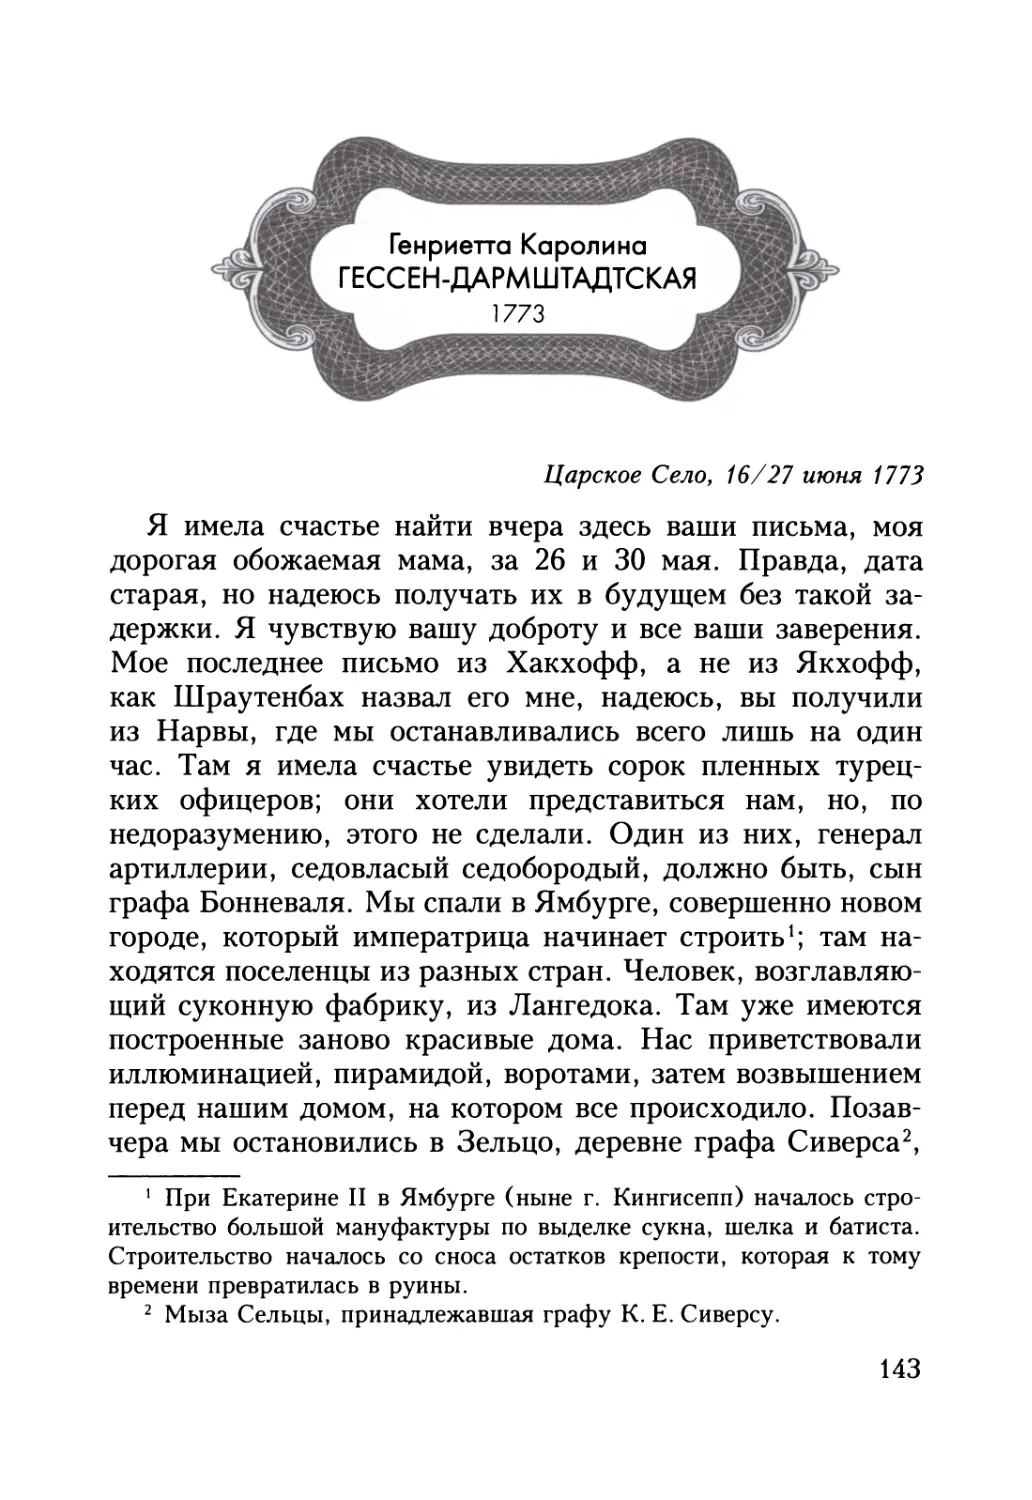 ГЕНРИЕТТА КАРОЛИНА ГЕССЕН-ДАРМШТАДТСКАЯ. Письма 1773 г